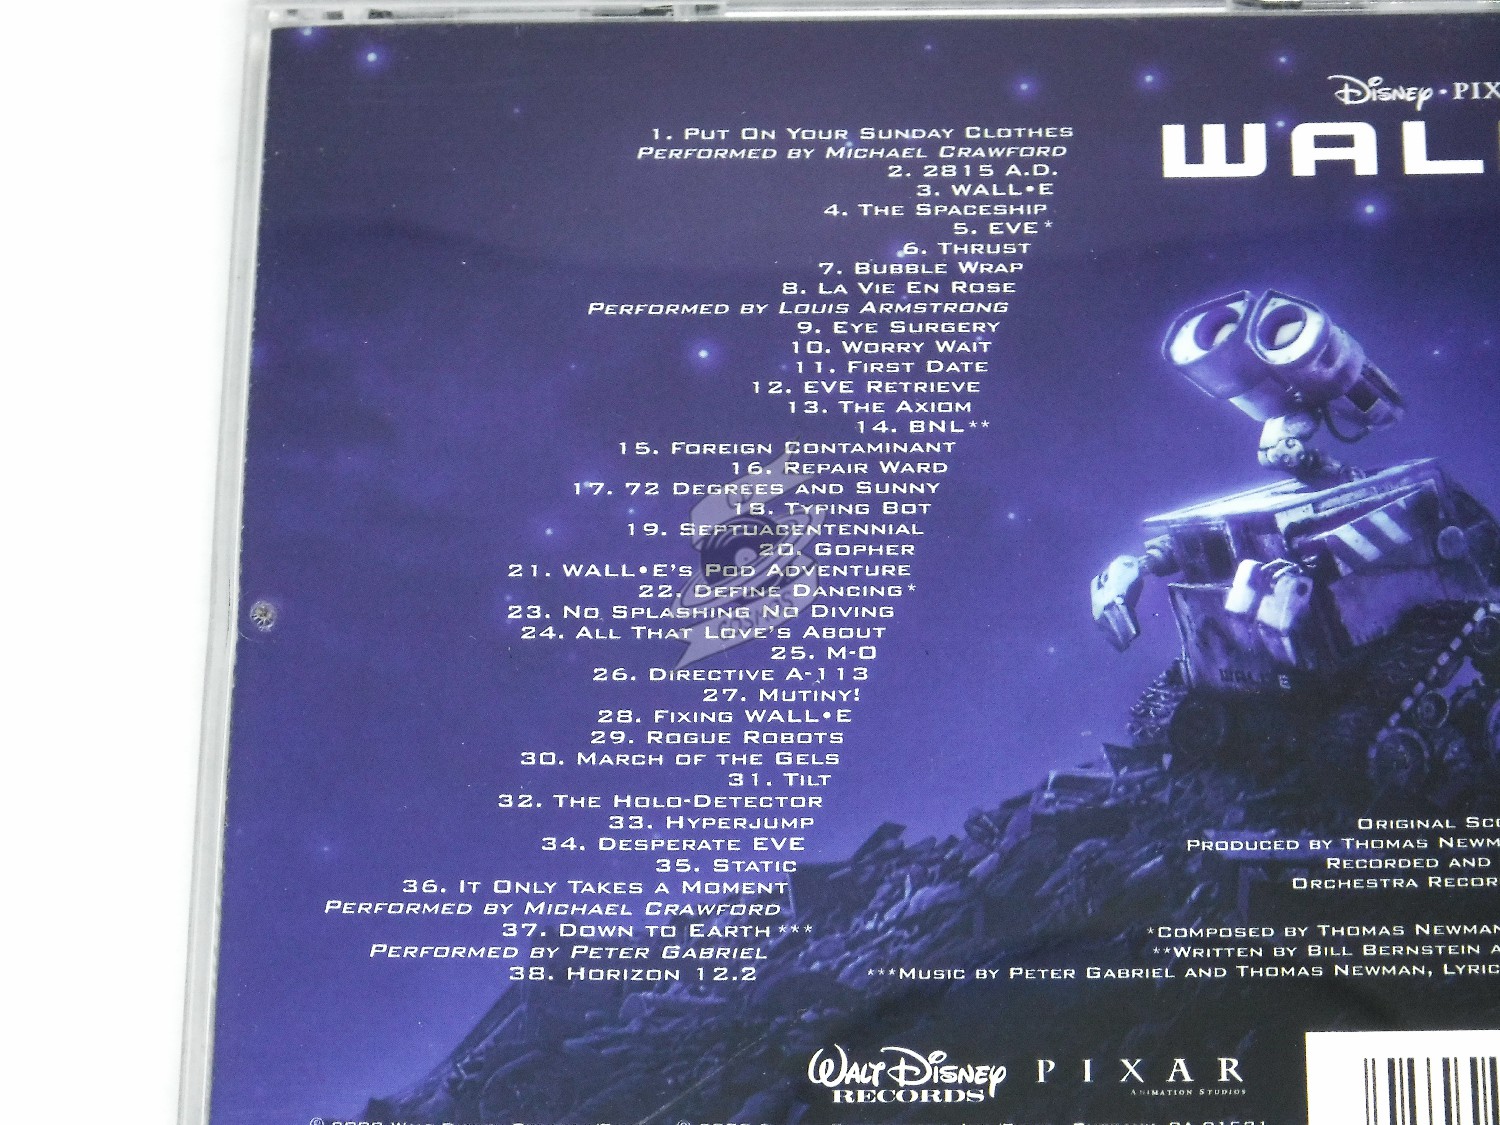 WALL-E (soundtrack) - Wikipedia